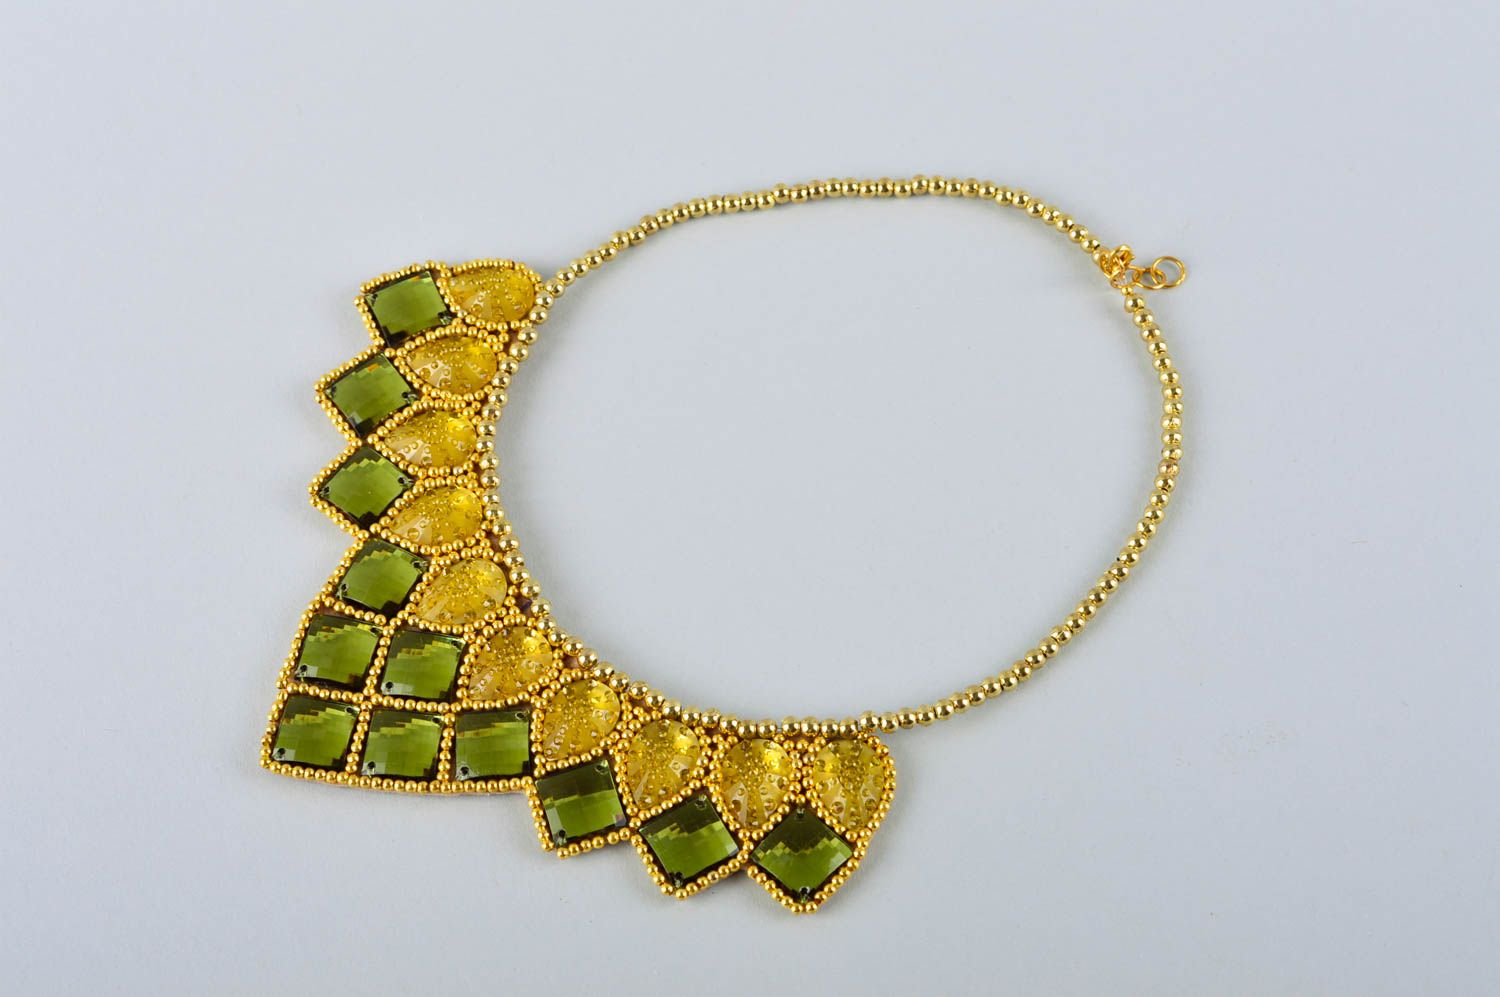 Handmade necklace designer accessory gift ideas elite jewelry bead necklace photo 4